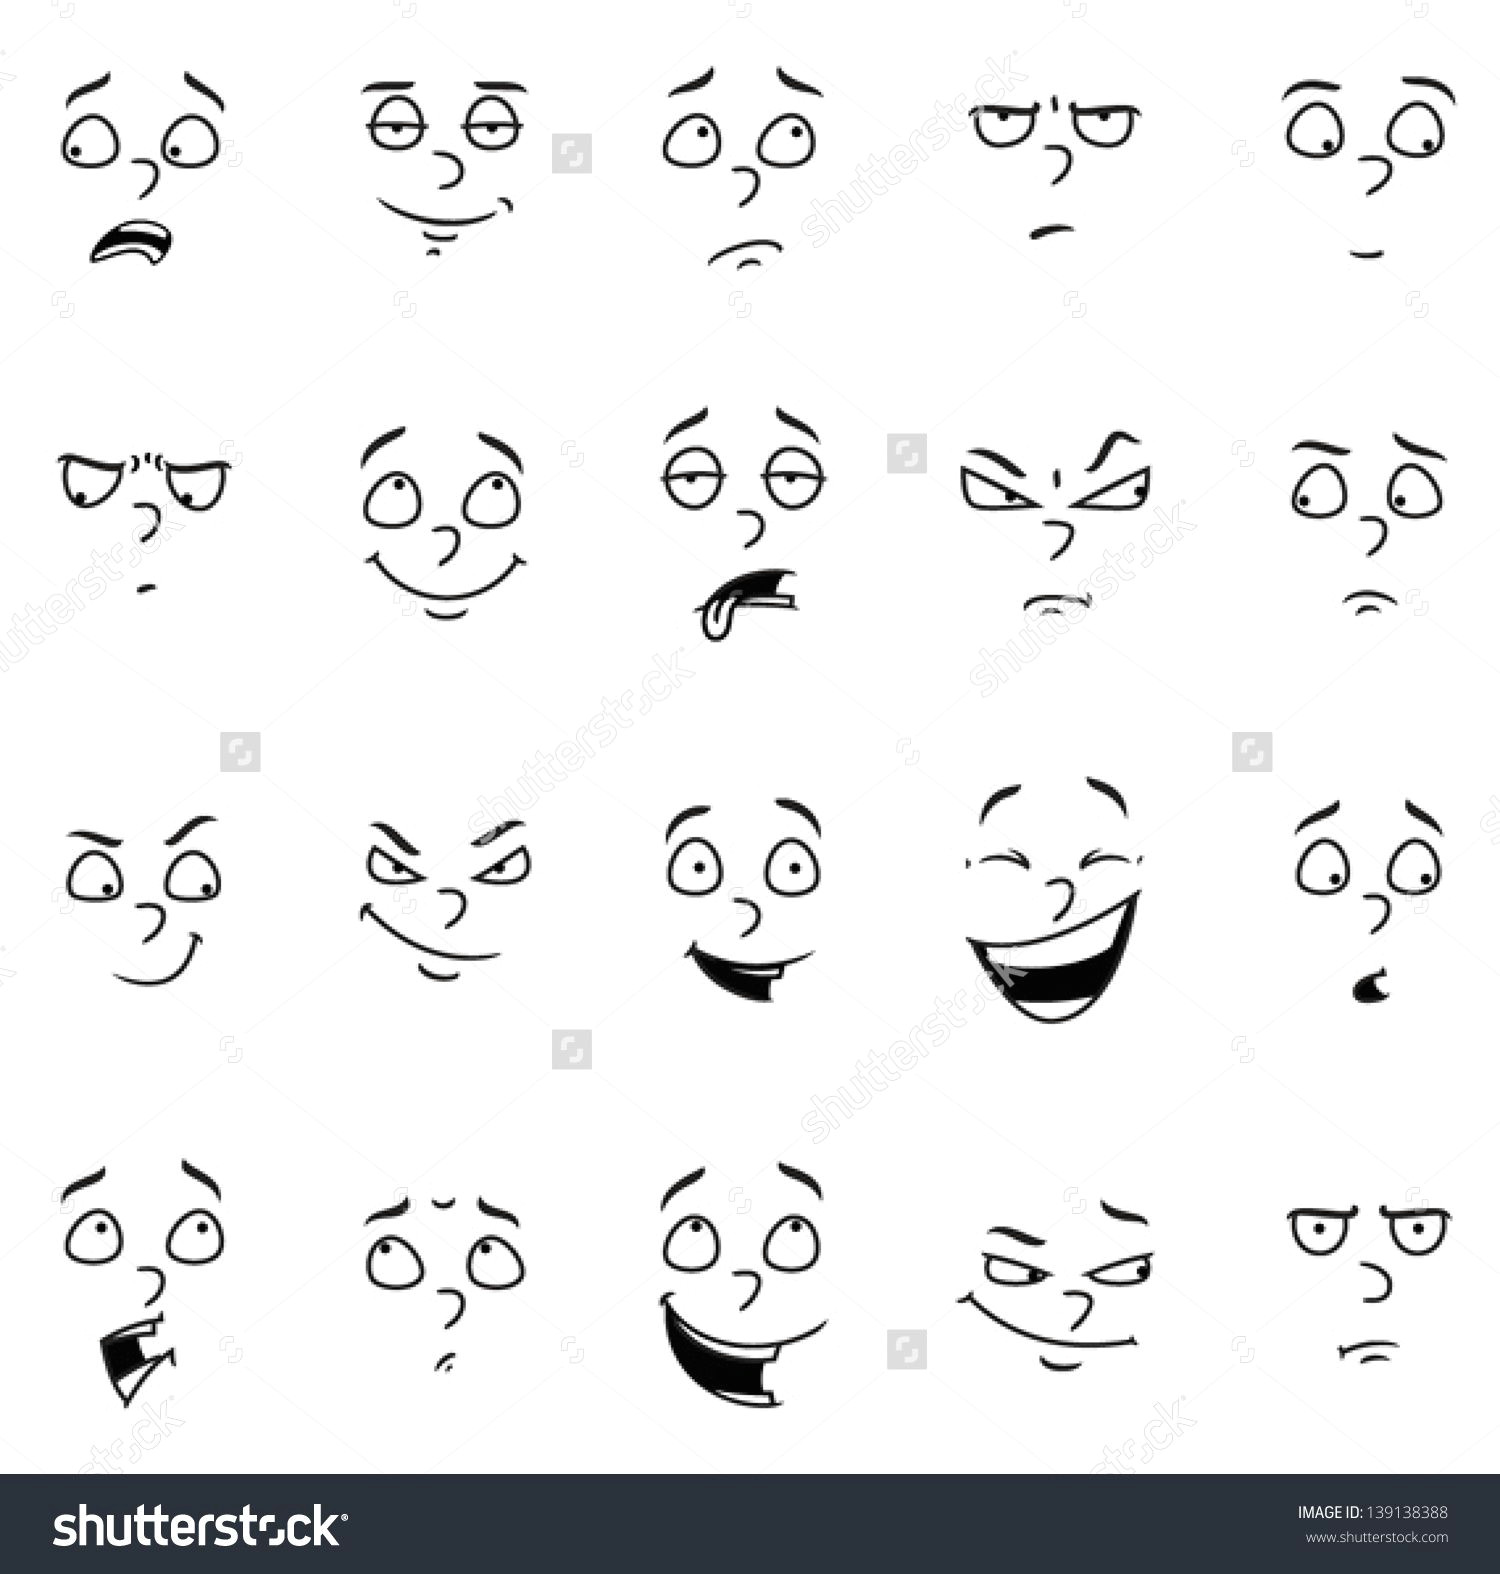 Drawing Of An Eye Cartoon Simple Woman Cartoon Facial Expressions Buscar Con Google Art